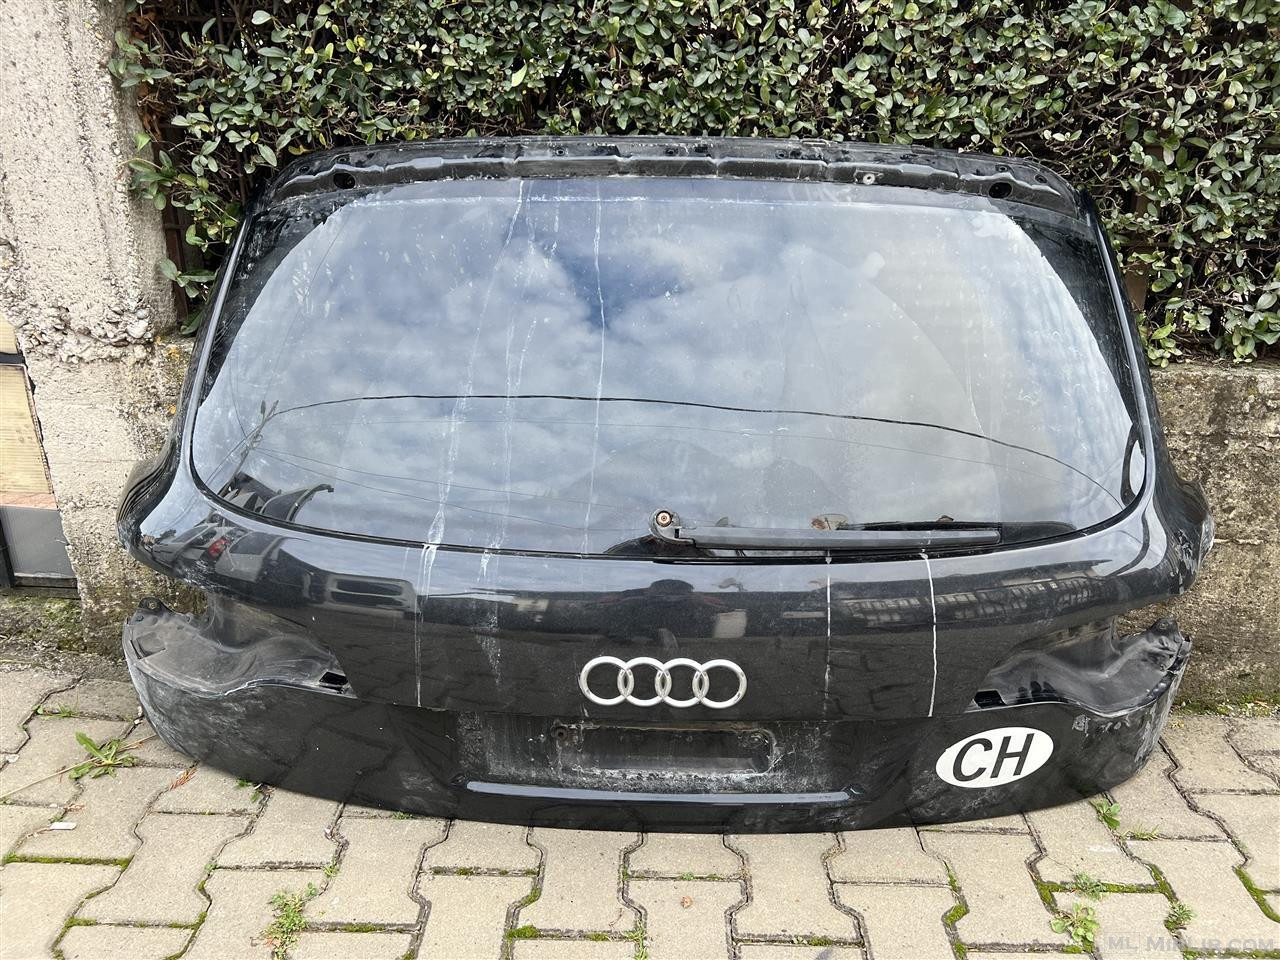 Gepeku dhe xhami i gepekut Audi q7